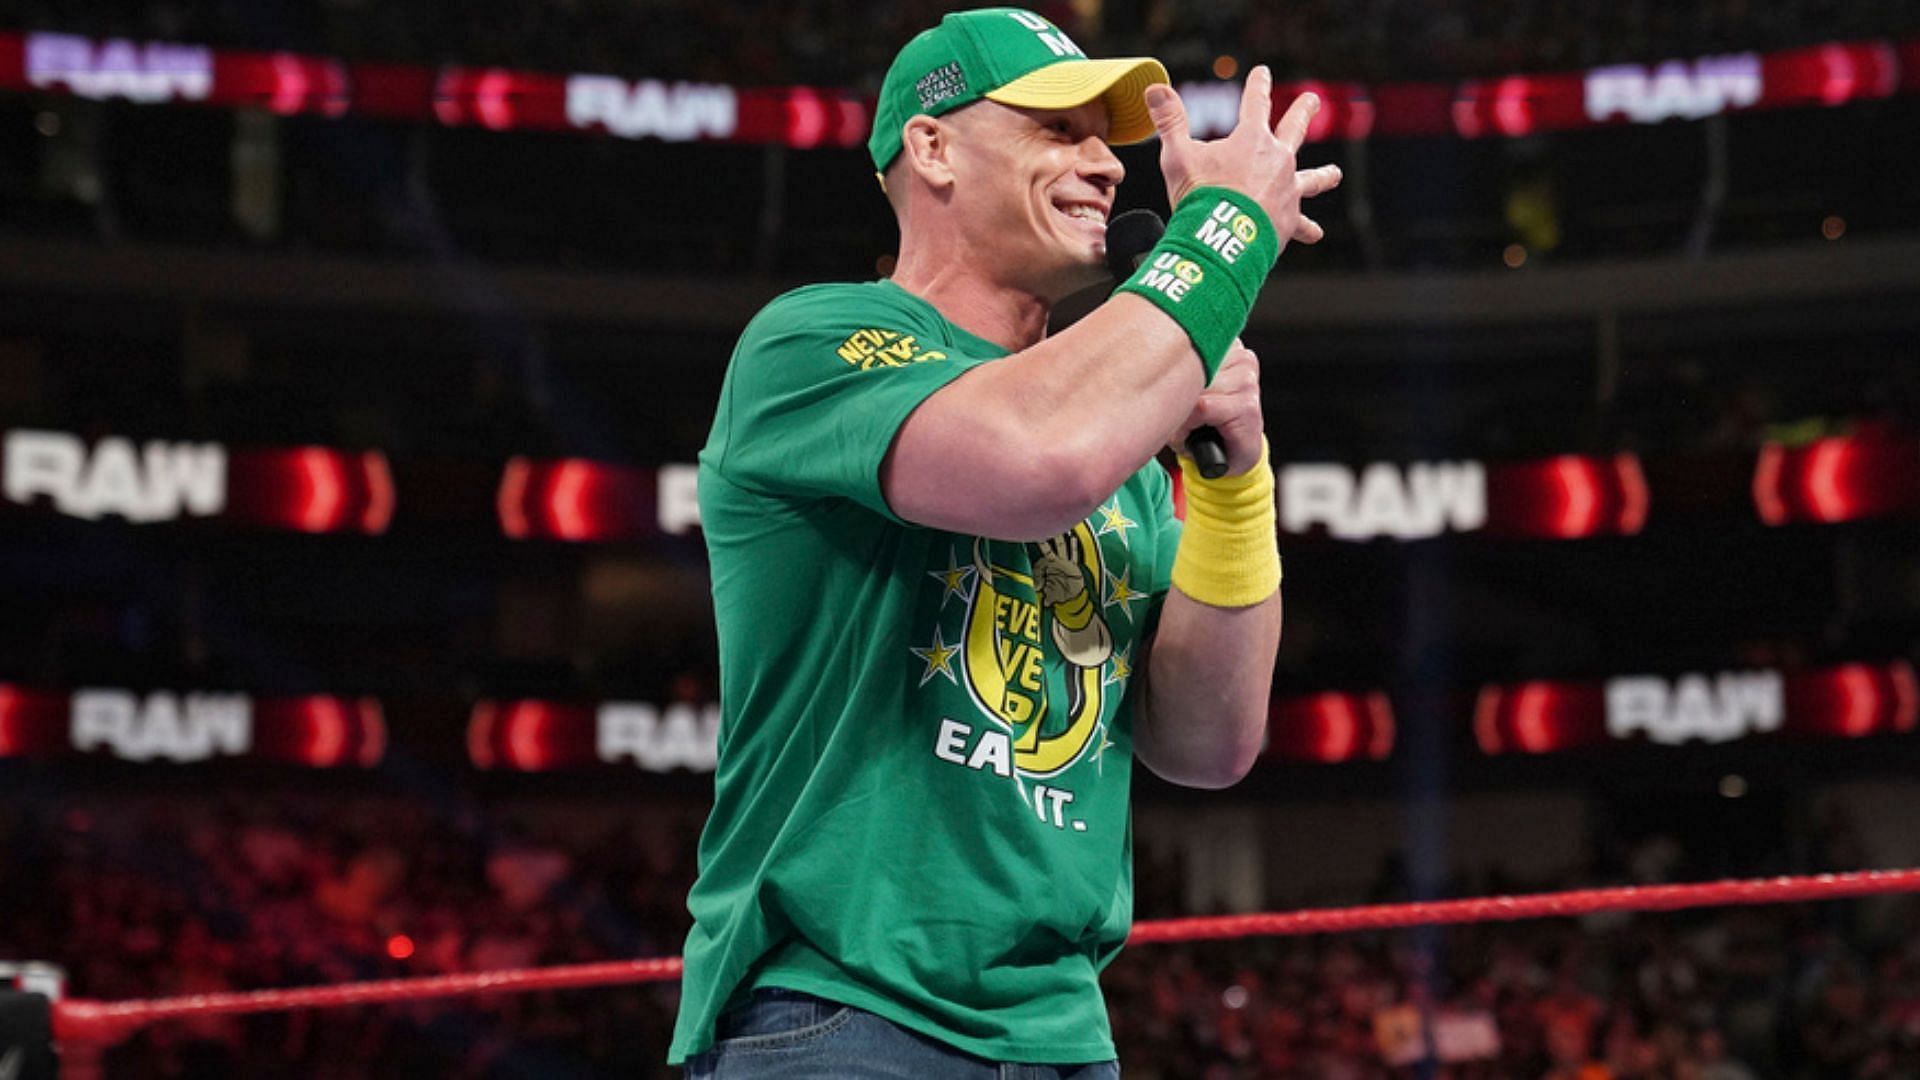 John Cena is a 16 time WWE World Champion